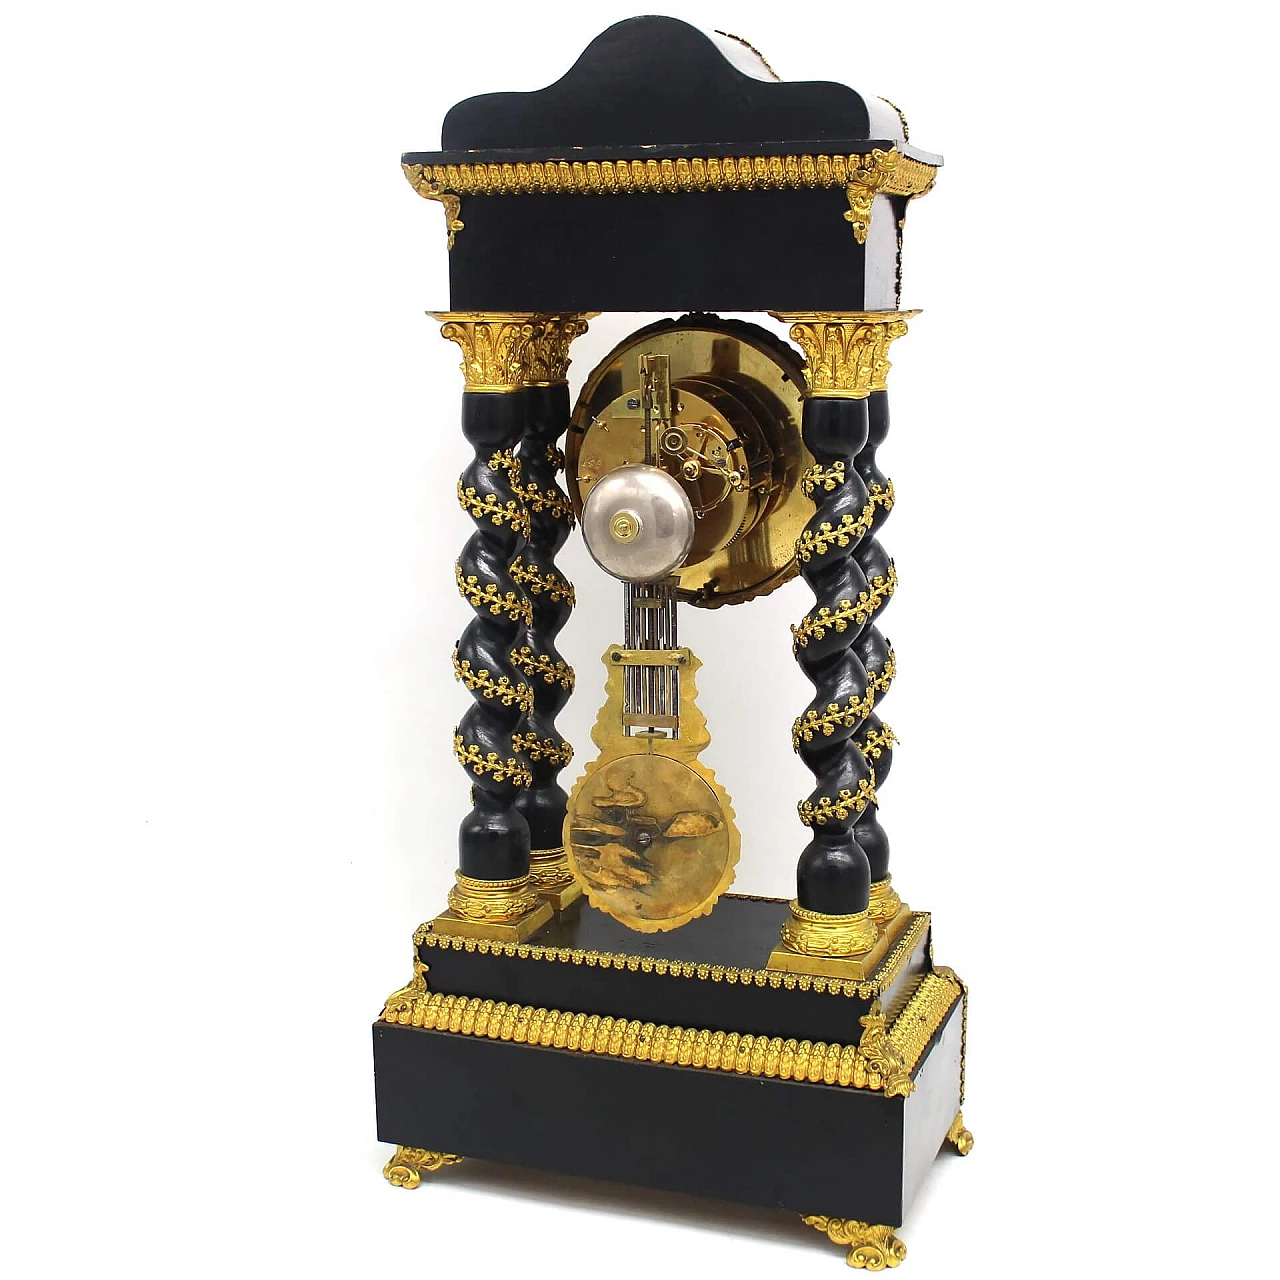 Napoleon III pendulum clock in ebonized wood and gilded bronzes, 19th century. 1336769